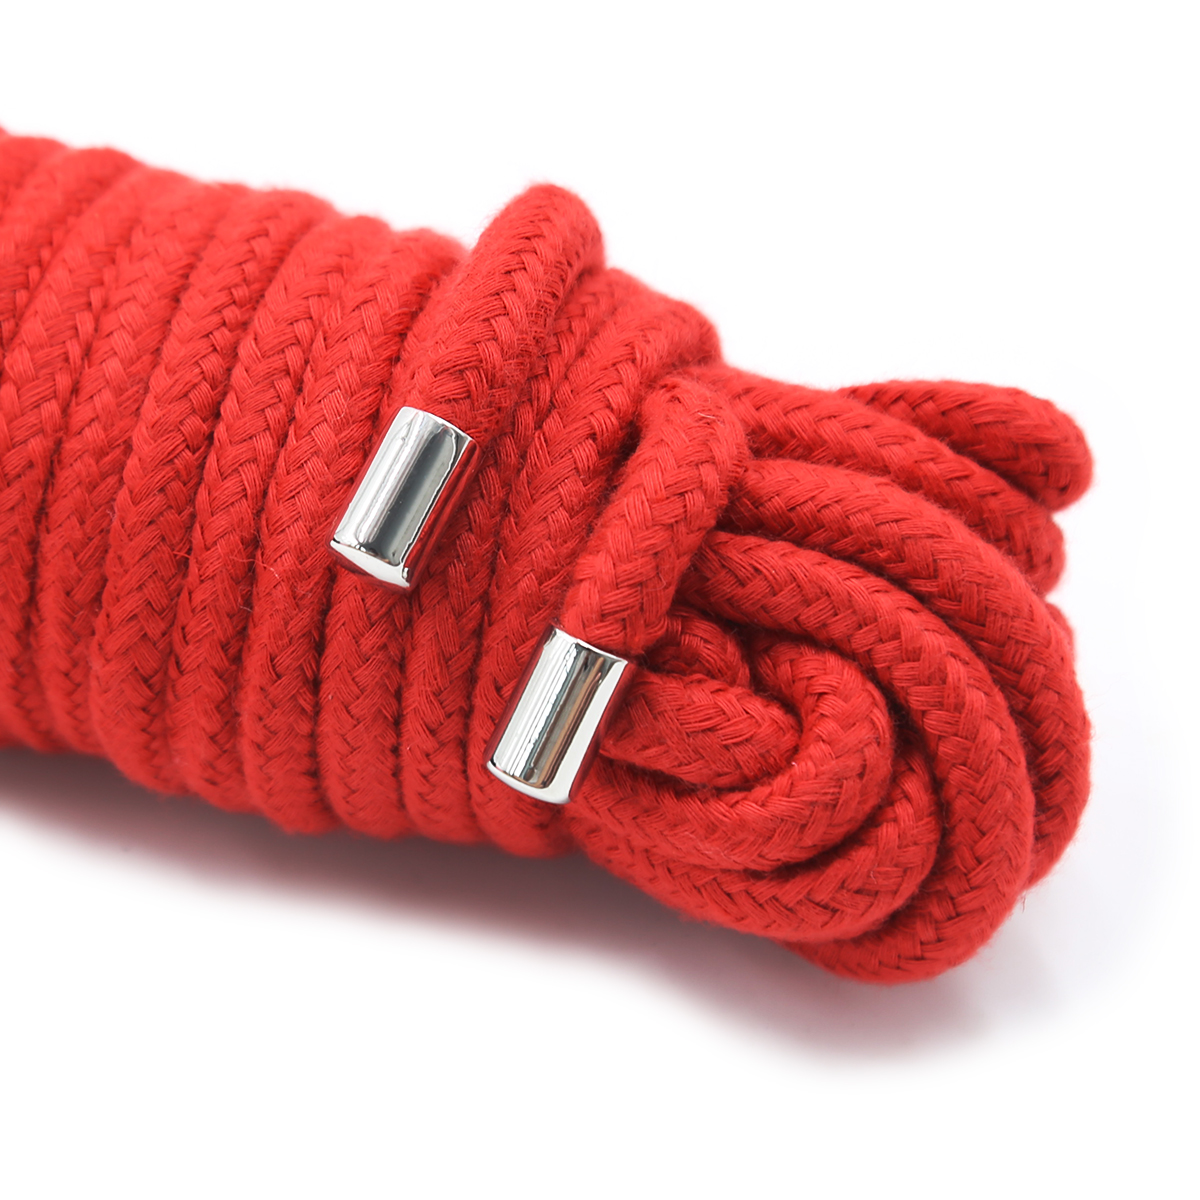 20-Meter-BDSM-Cotton-Rope-Red-OPR-321049-2